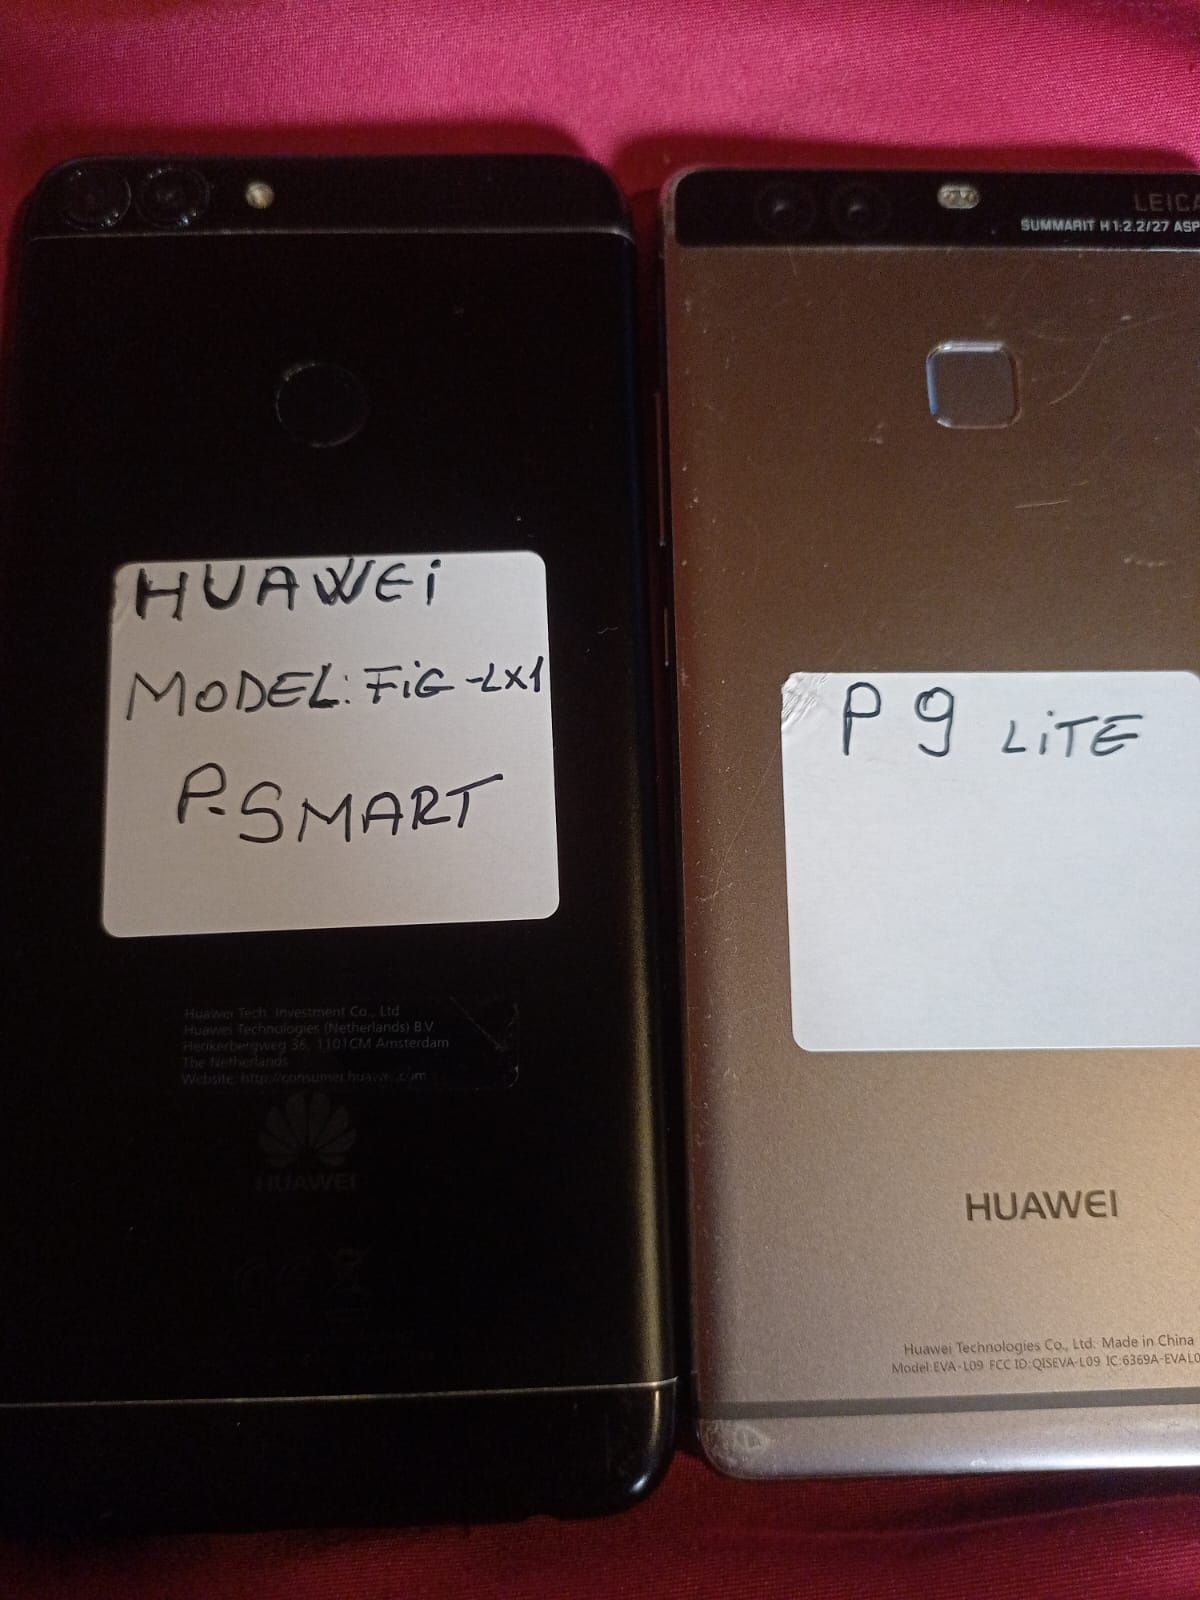 huawei p9 lite +p smart model:fig Lx1